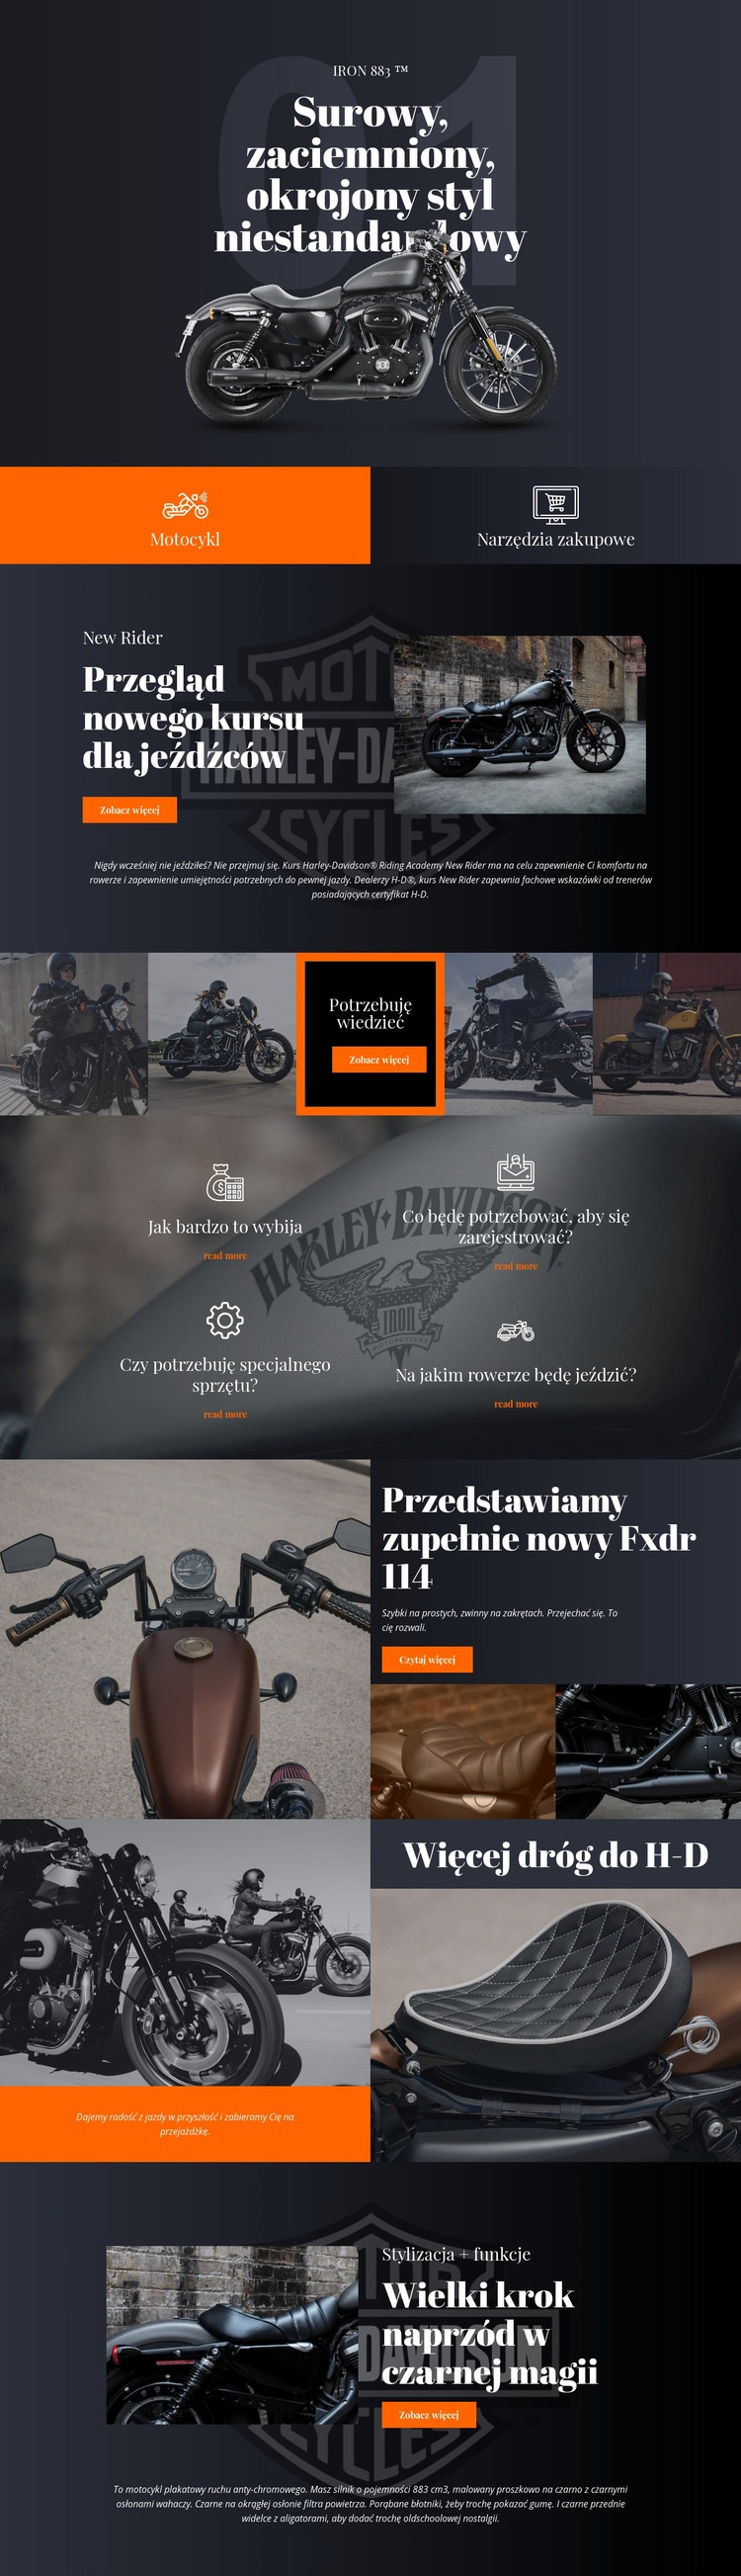 Harley Davidson Szablon